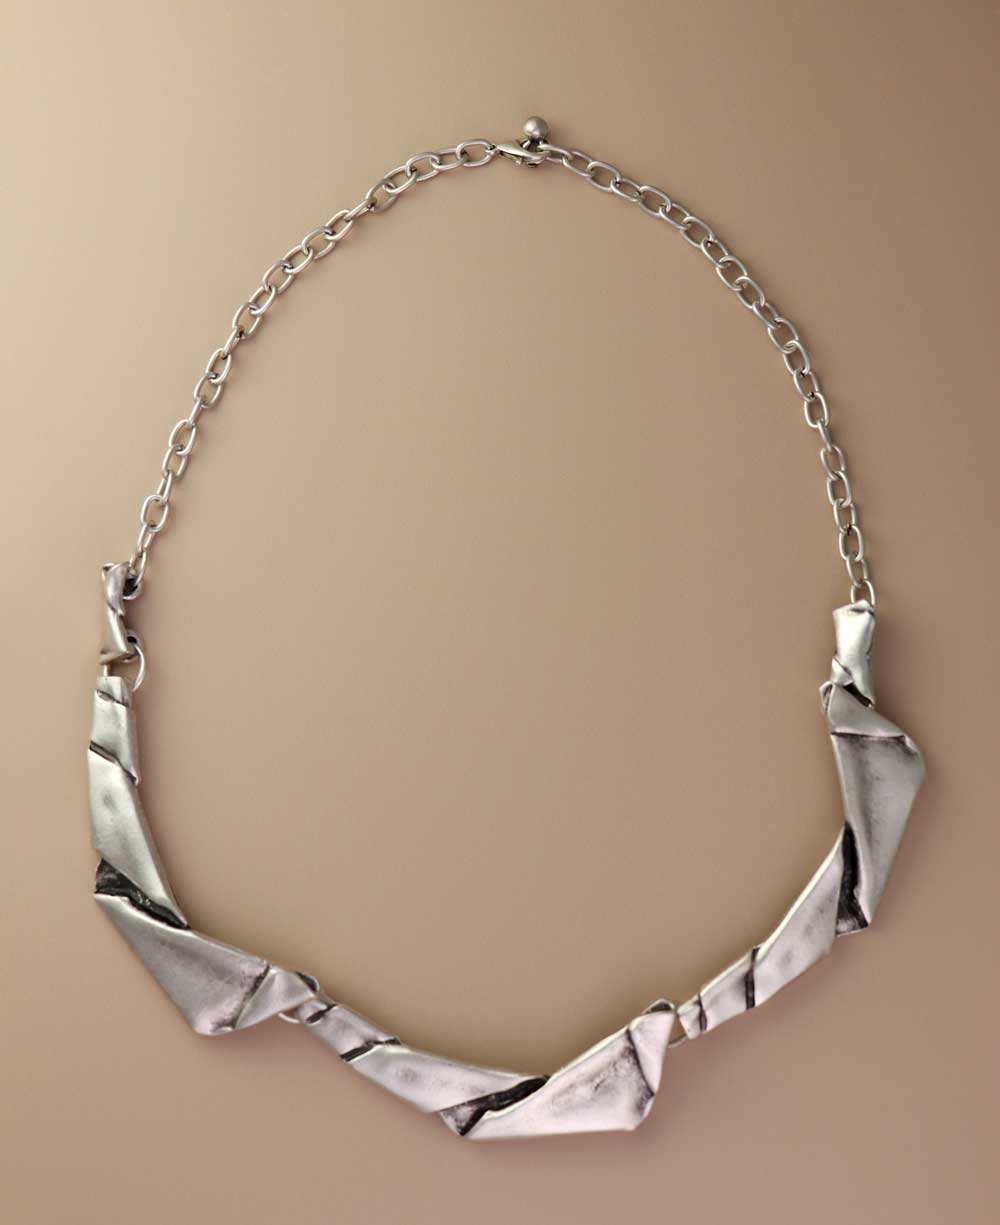 Creative folded metal necklace